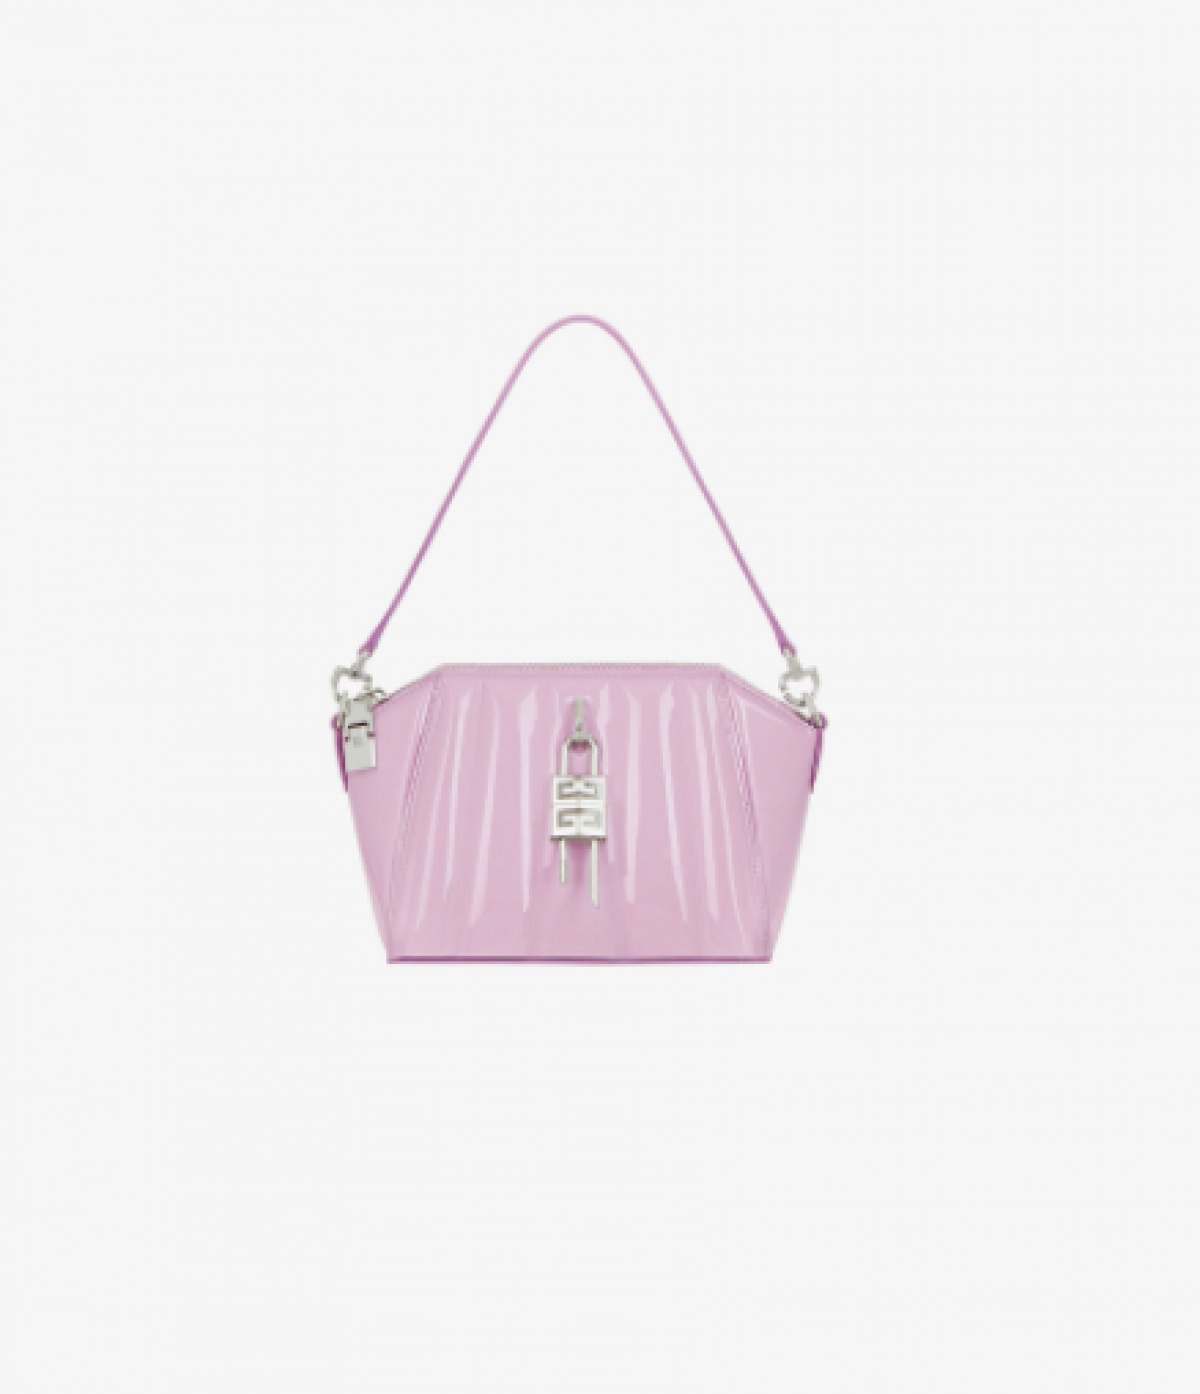 Le sac à main Antigona de Givenchy